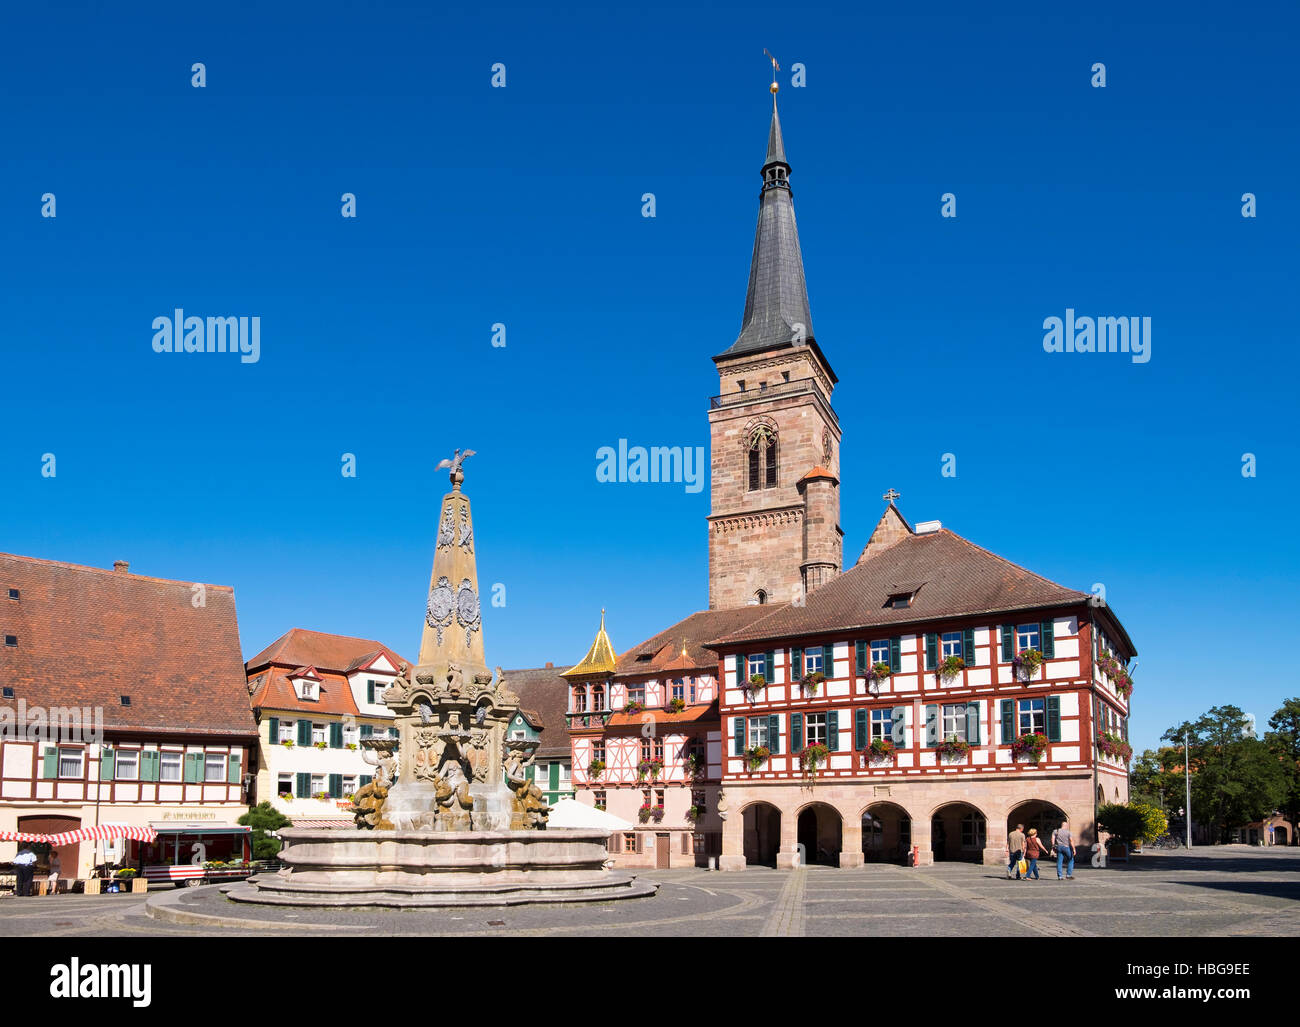 Schöner Brunnen, fontana, Municipio e Chiesa, Königsplatz, Schwabach, Media Franconia, Franconia, Baviera, Germania Foto Stock